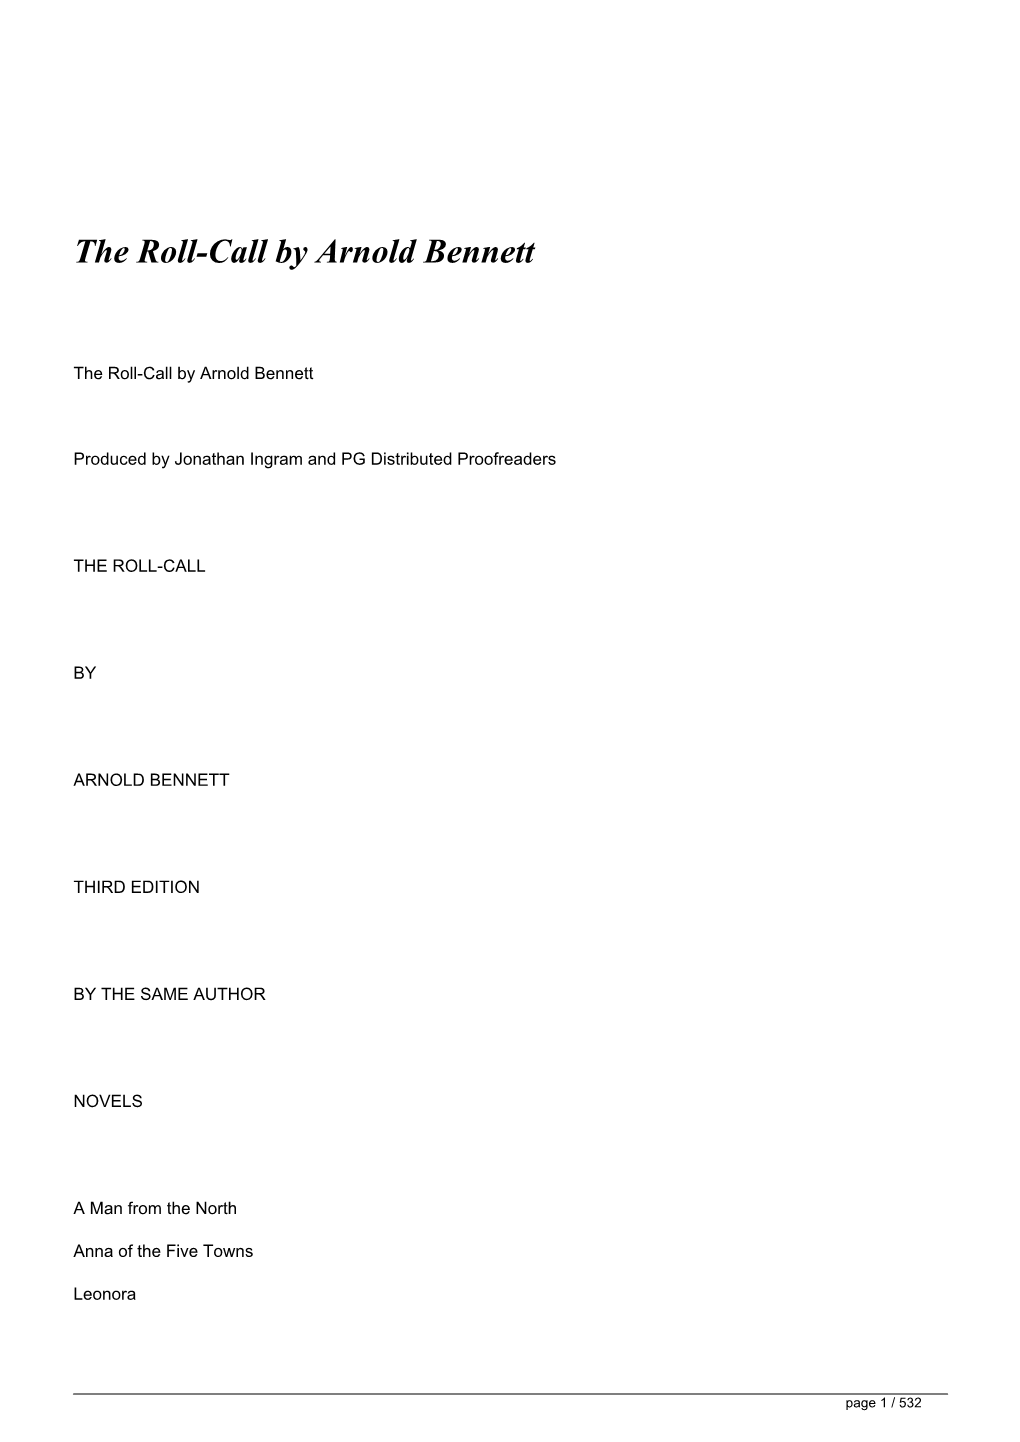 The Roll-Call by Arnold Bennett&lt;/H1&gt;